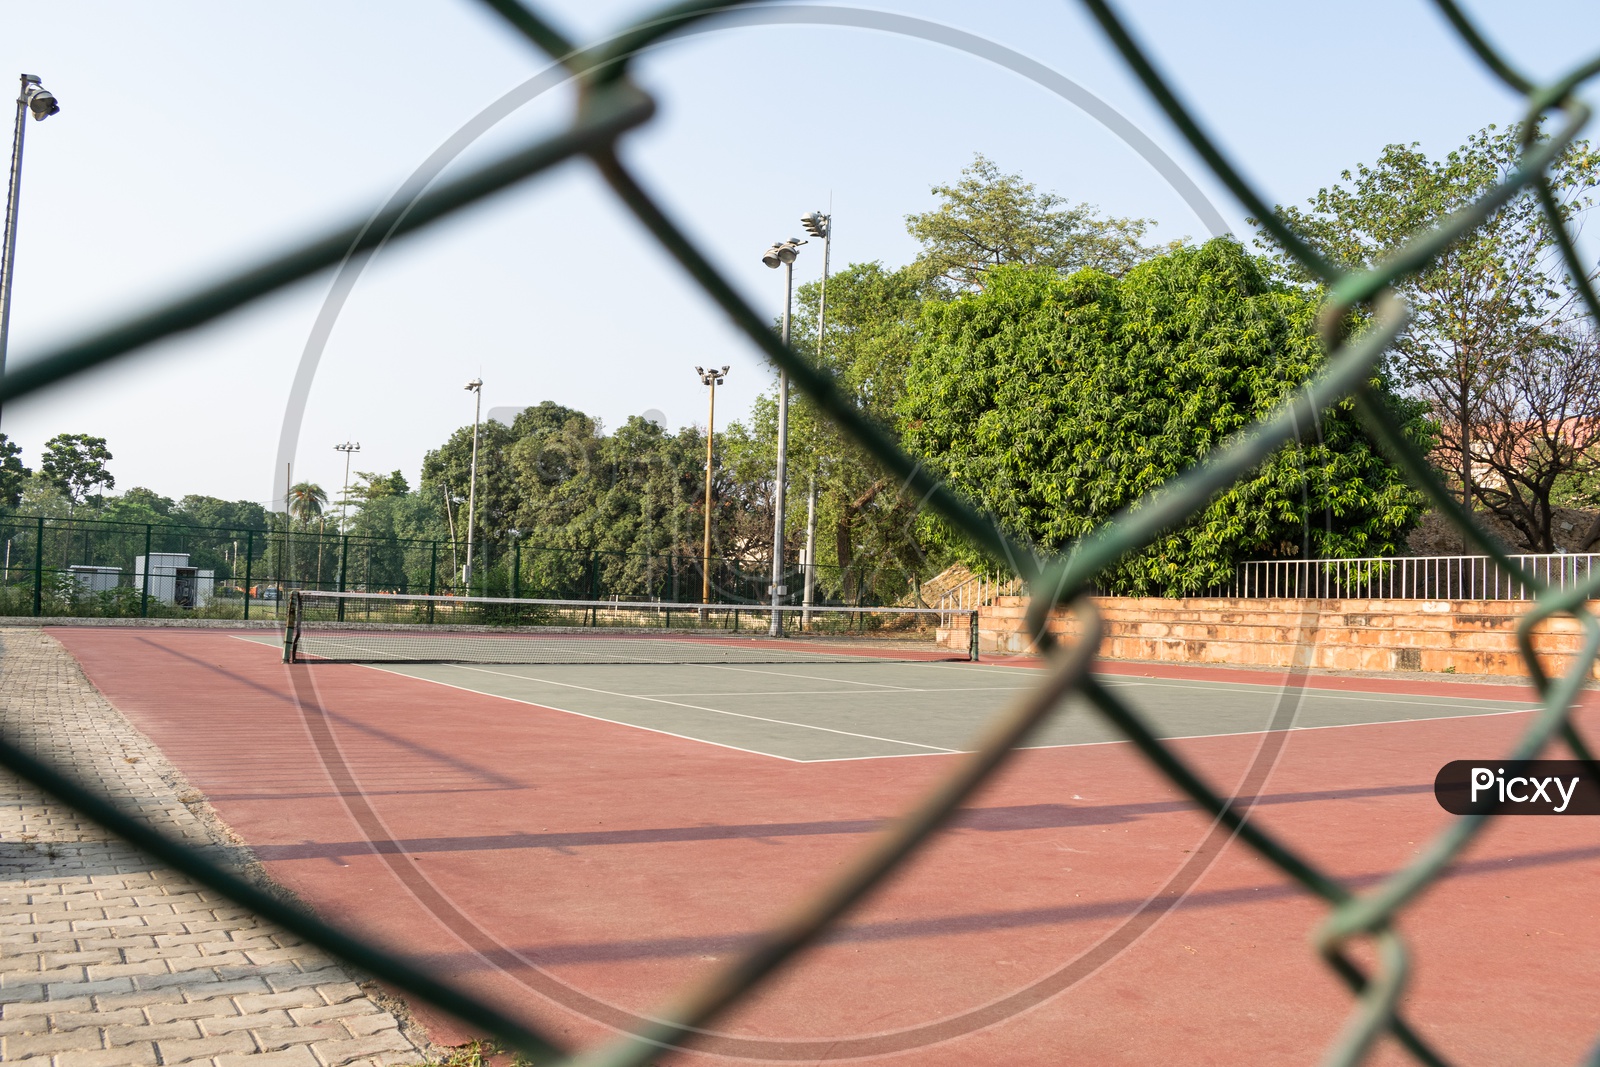 Tennis Courts, Indian Institute of Technology Roorkee(IIT Roorkee)